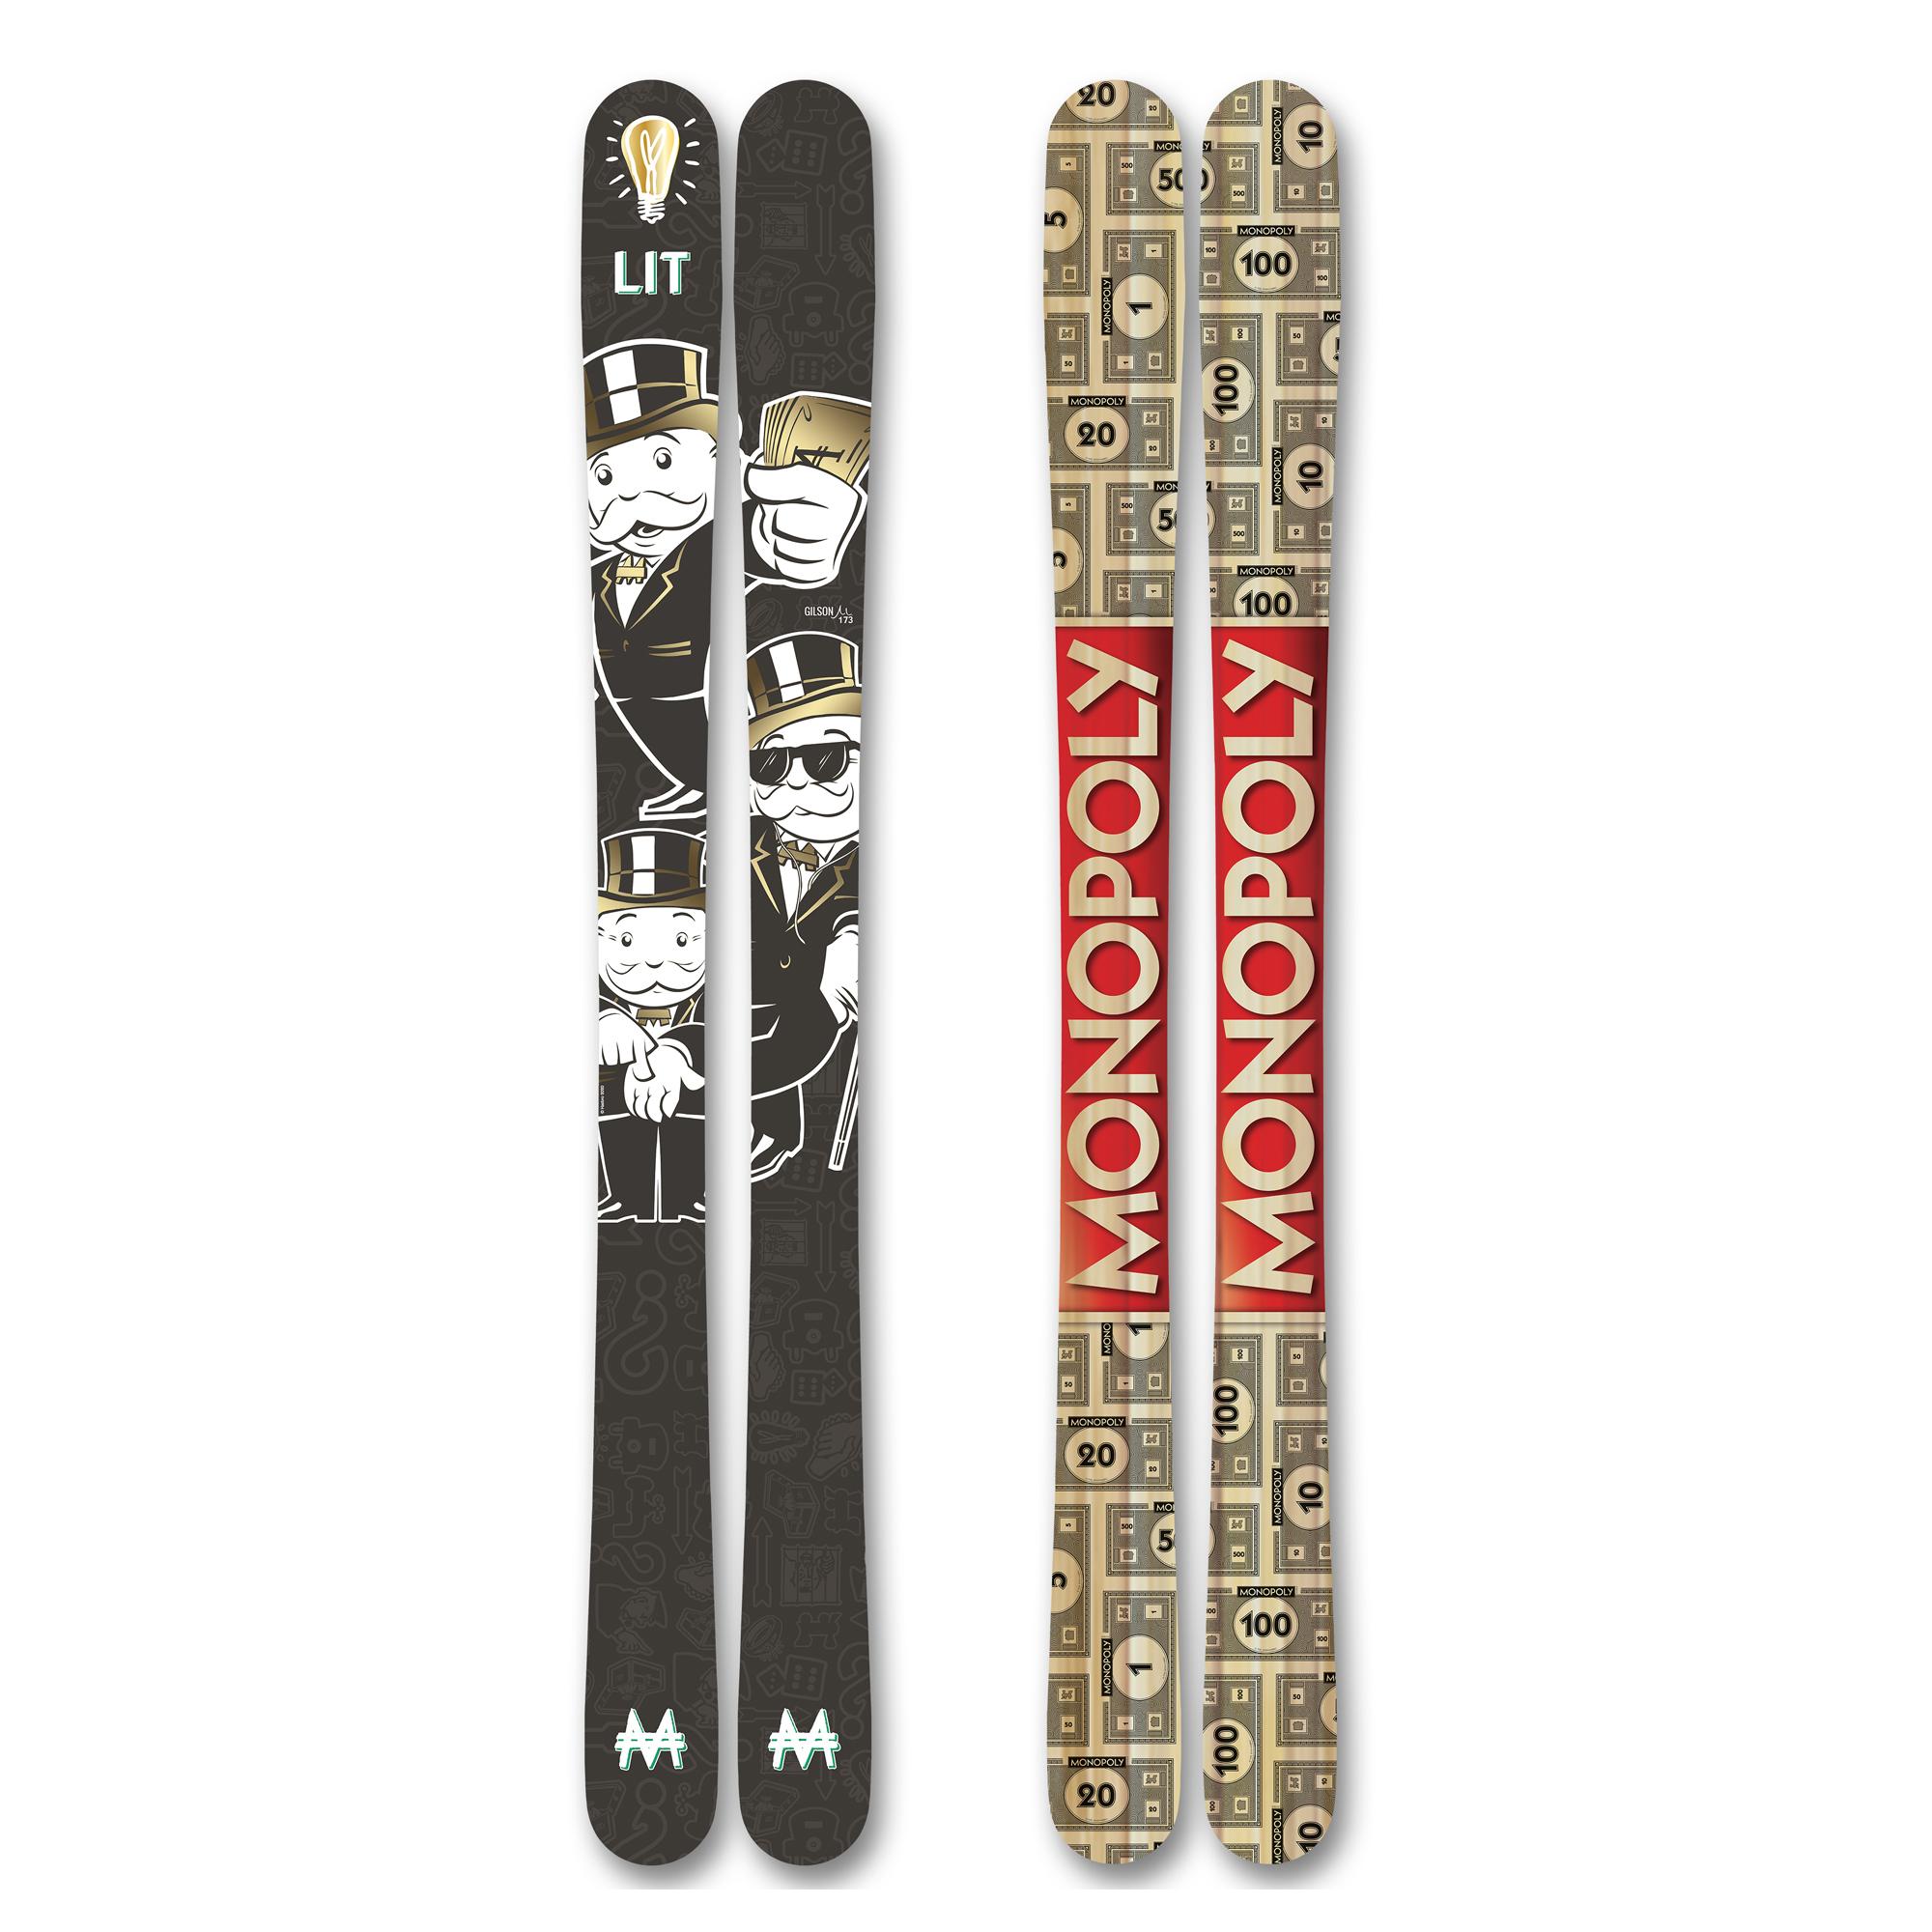 Gilson Snow Monopoly Skis